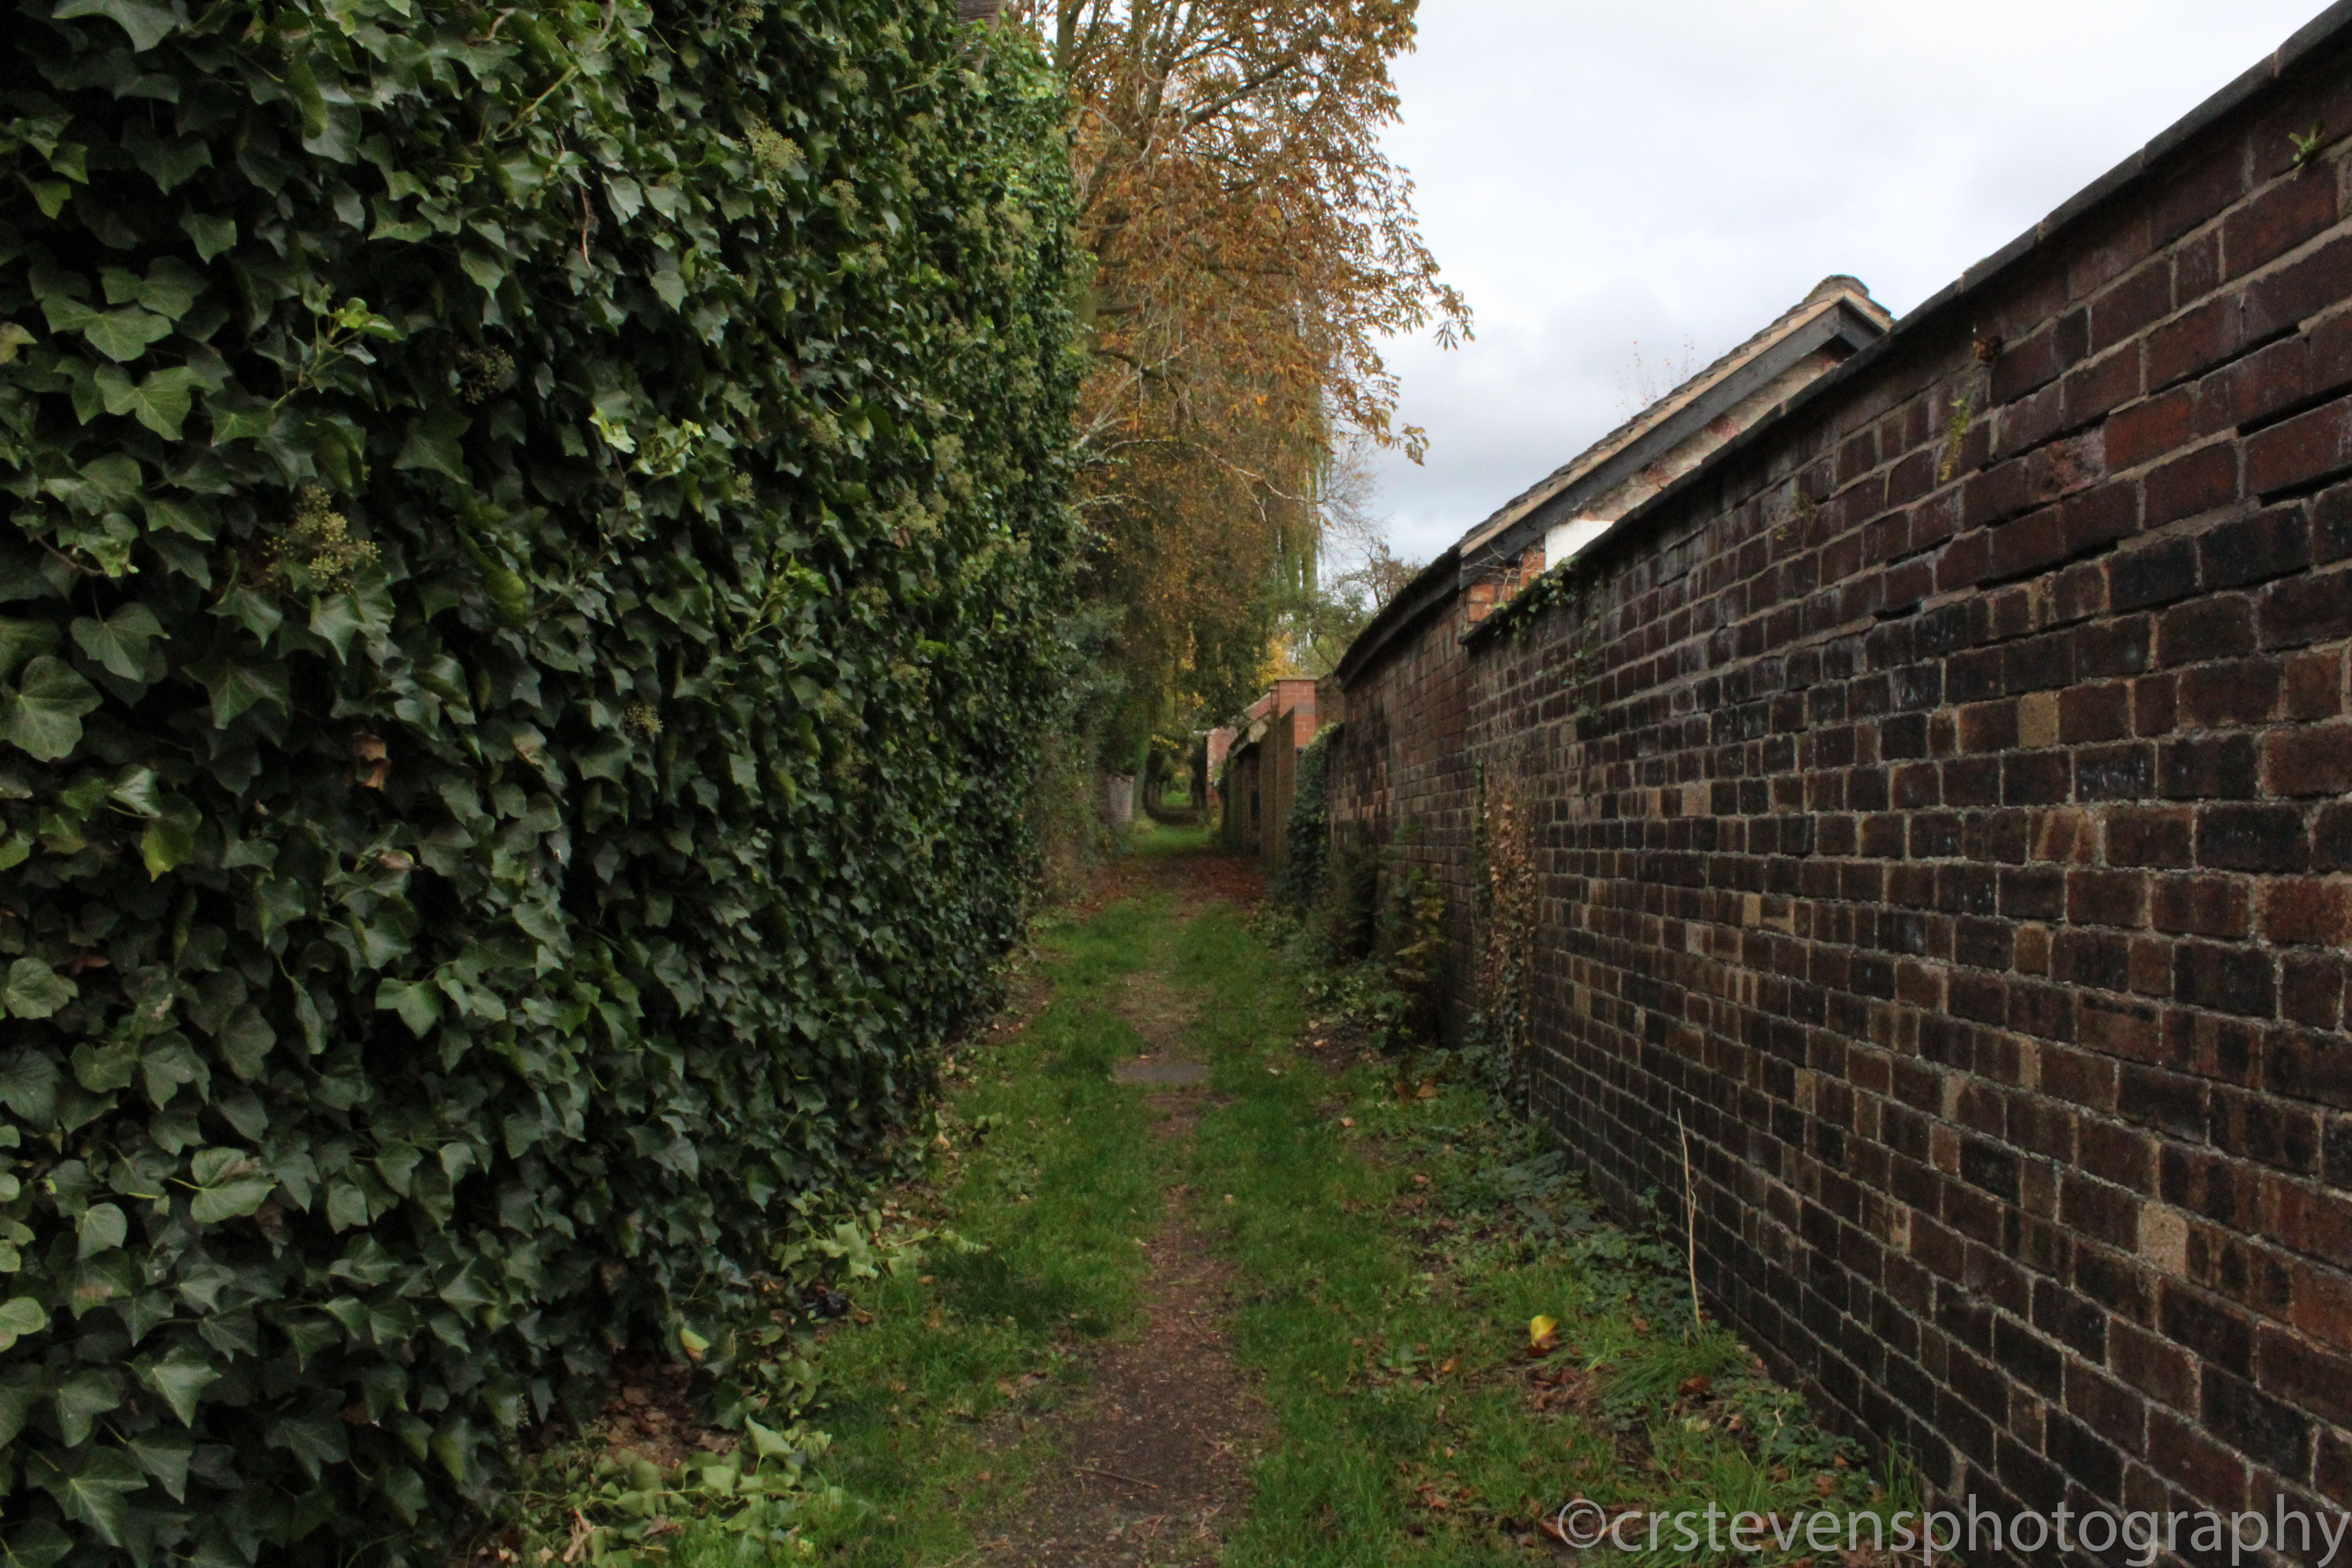 a very long alleyway covered in leaves